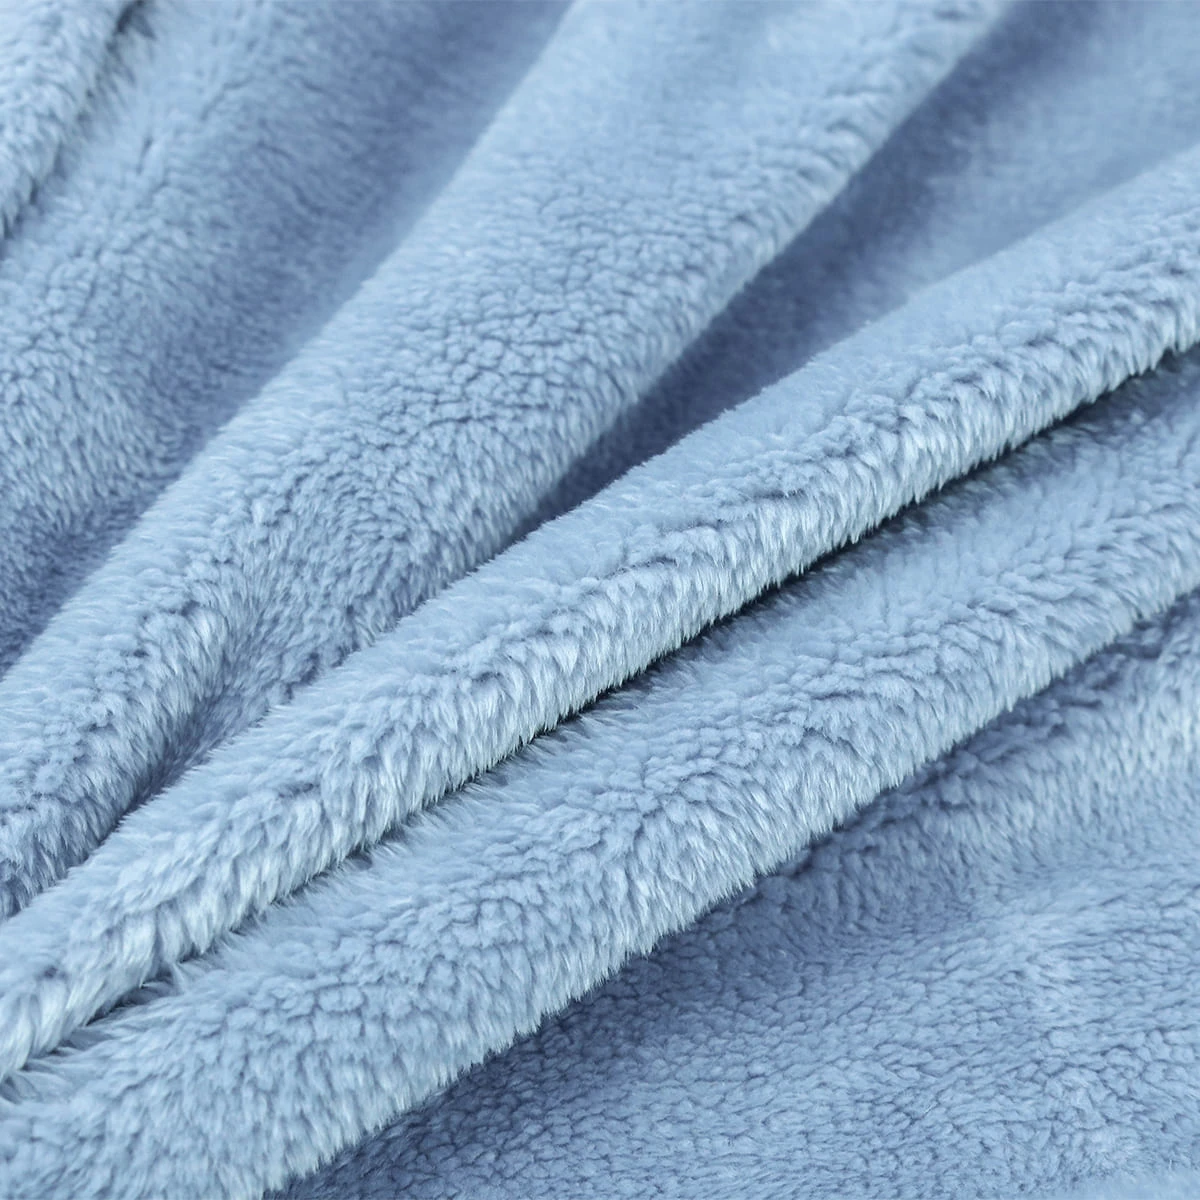 100% Recycled Polyester Zig Zag Pattern Jacquard Flannel Reversible Plush Blanket (Navy, Blue)